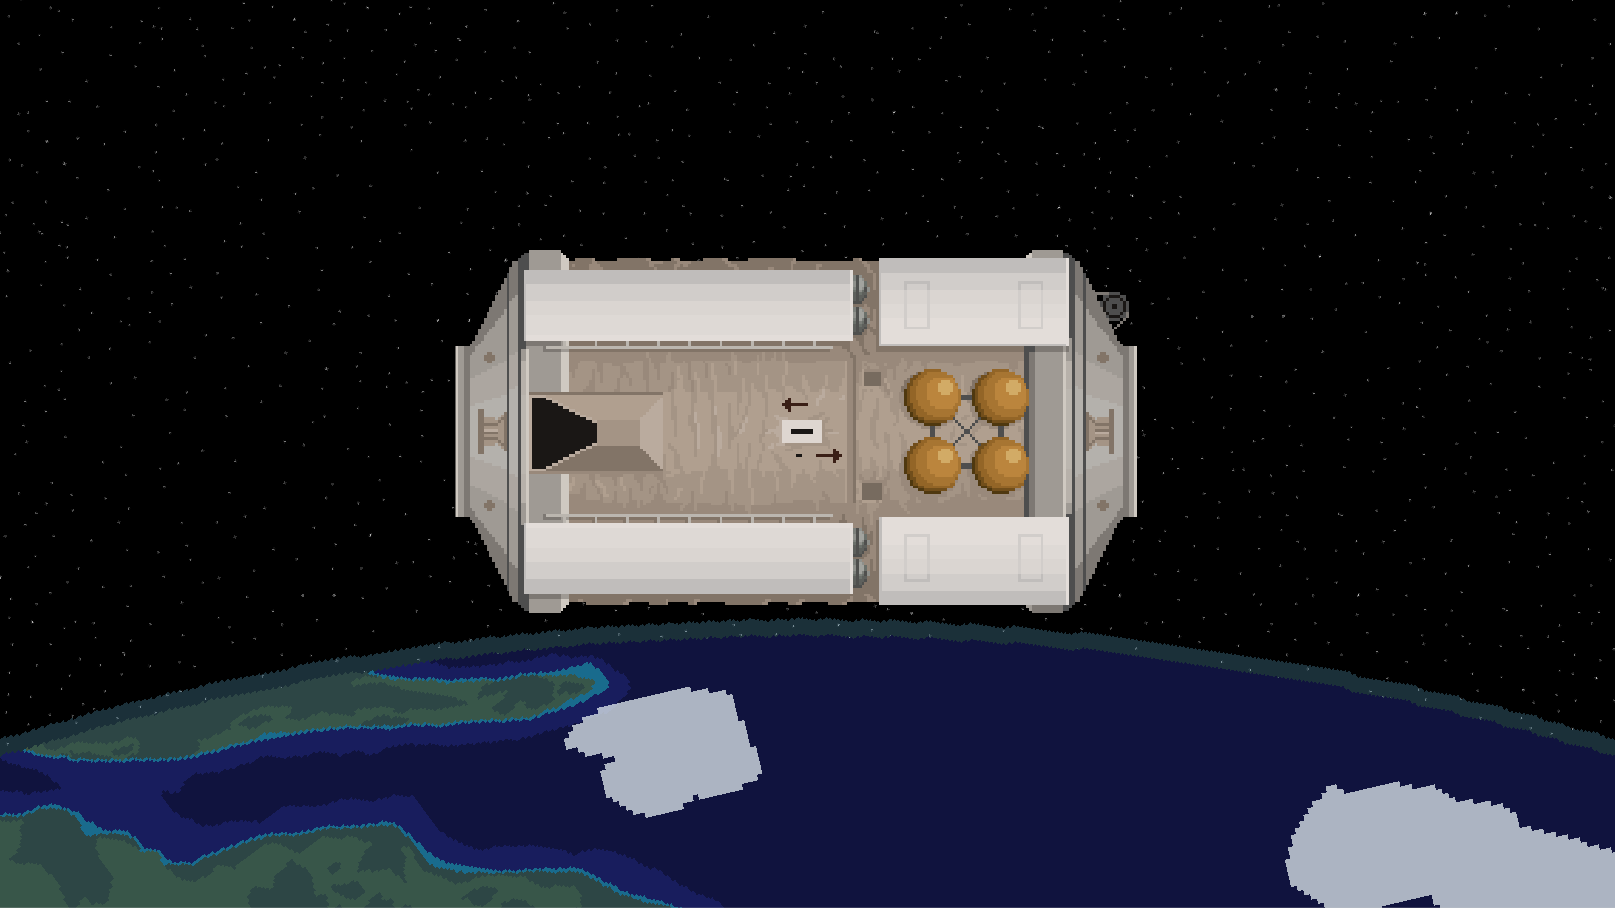 A Shuttle Era Module